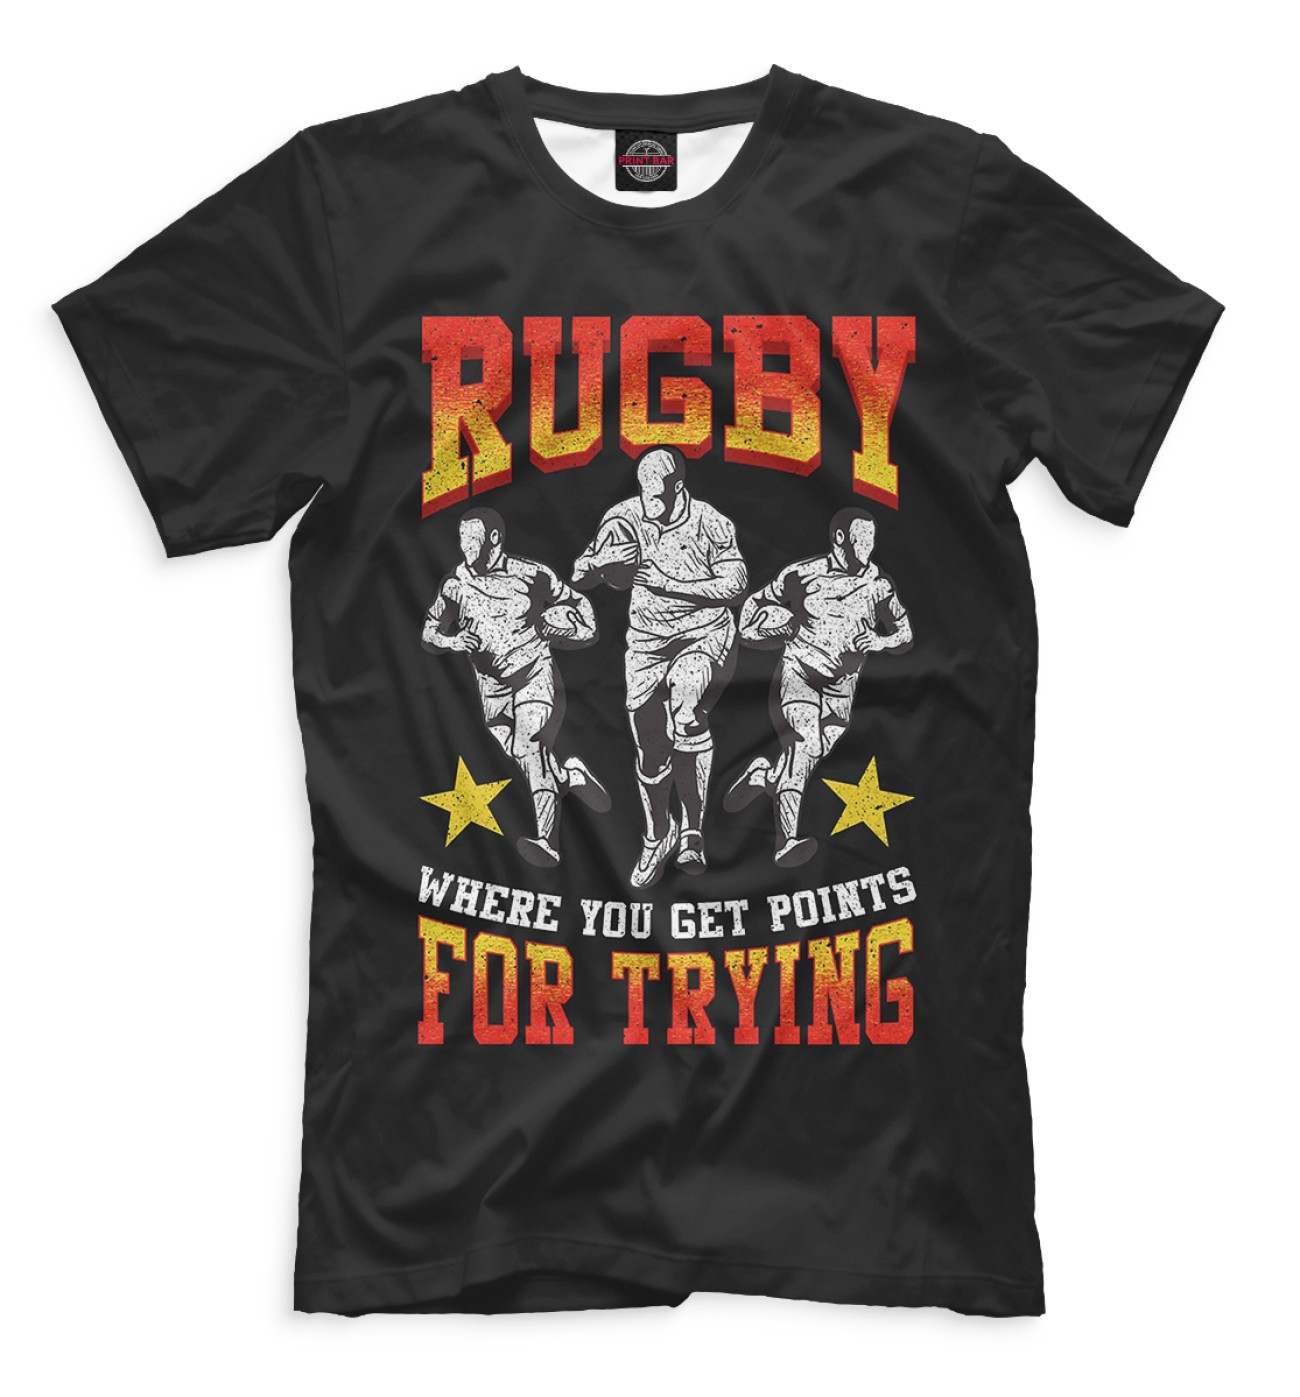 Мужская Футболка Rugby For Trying, артикул: REG-903495-fut-2